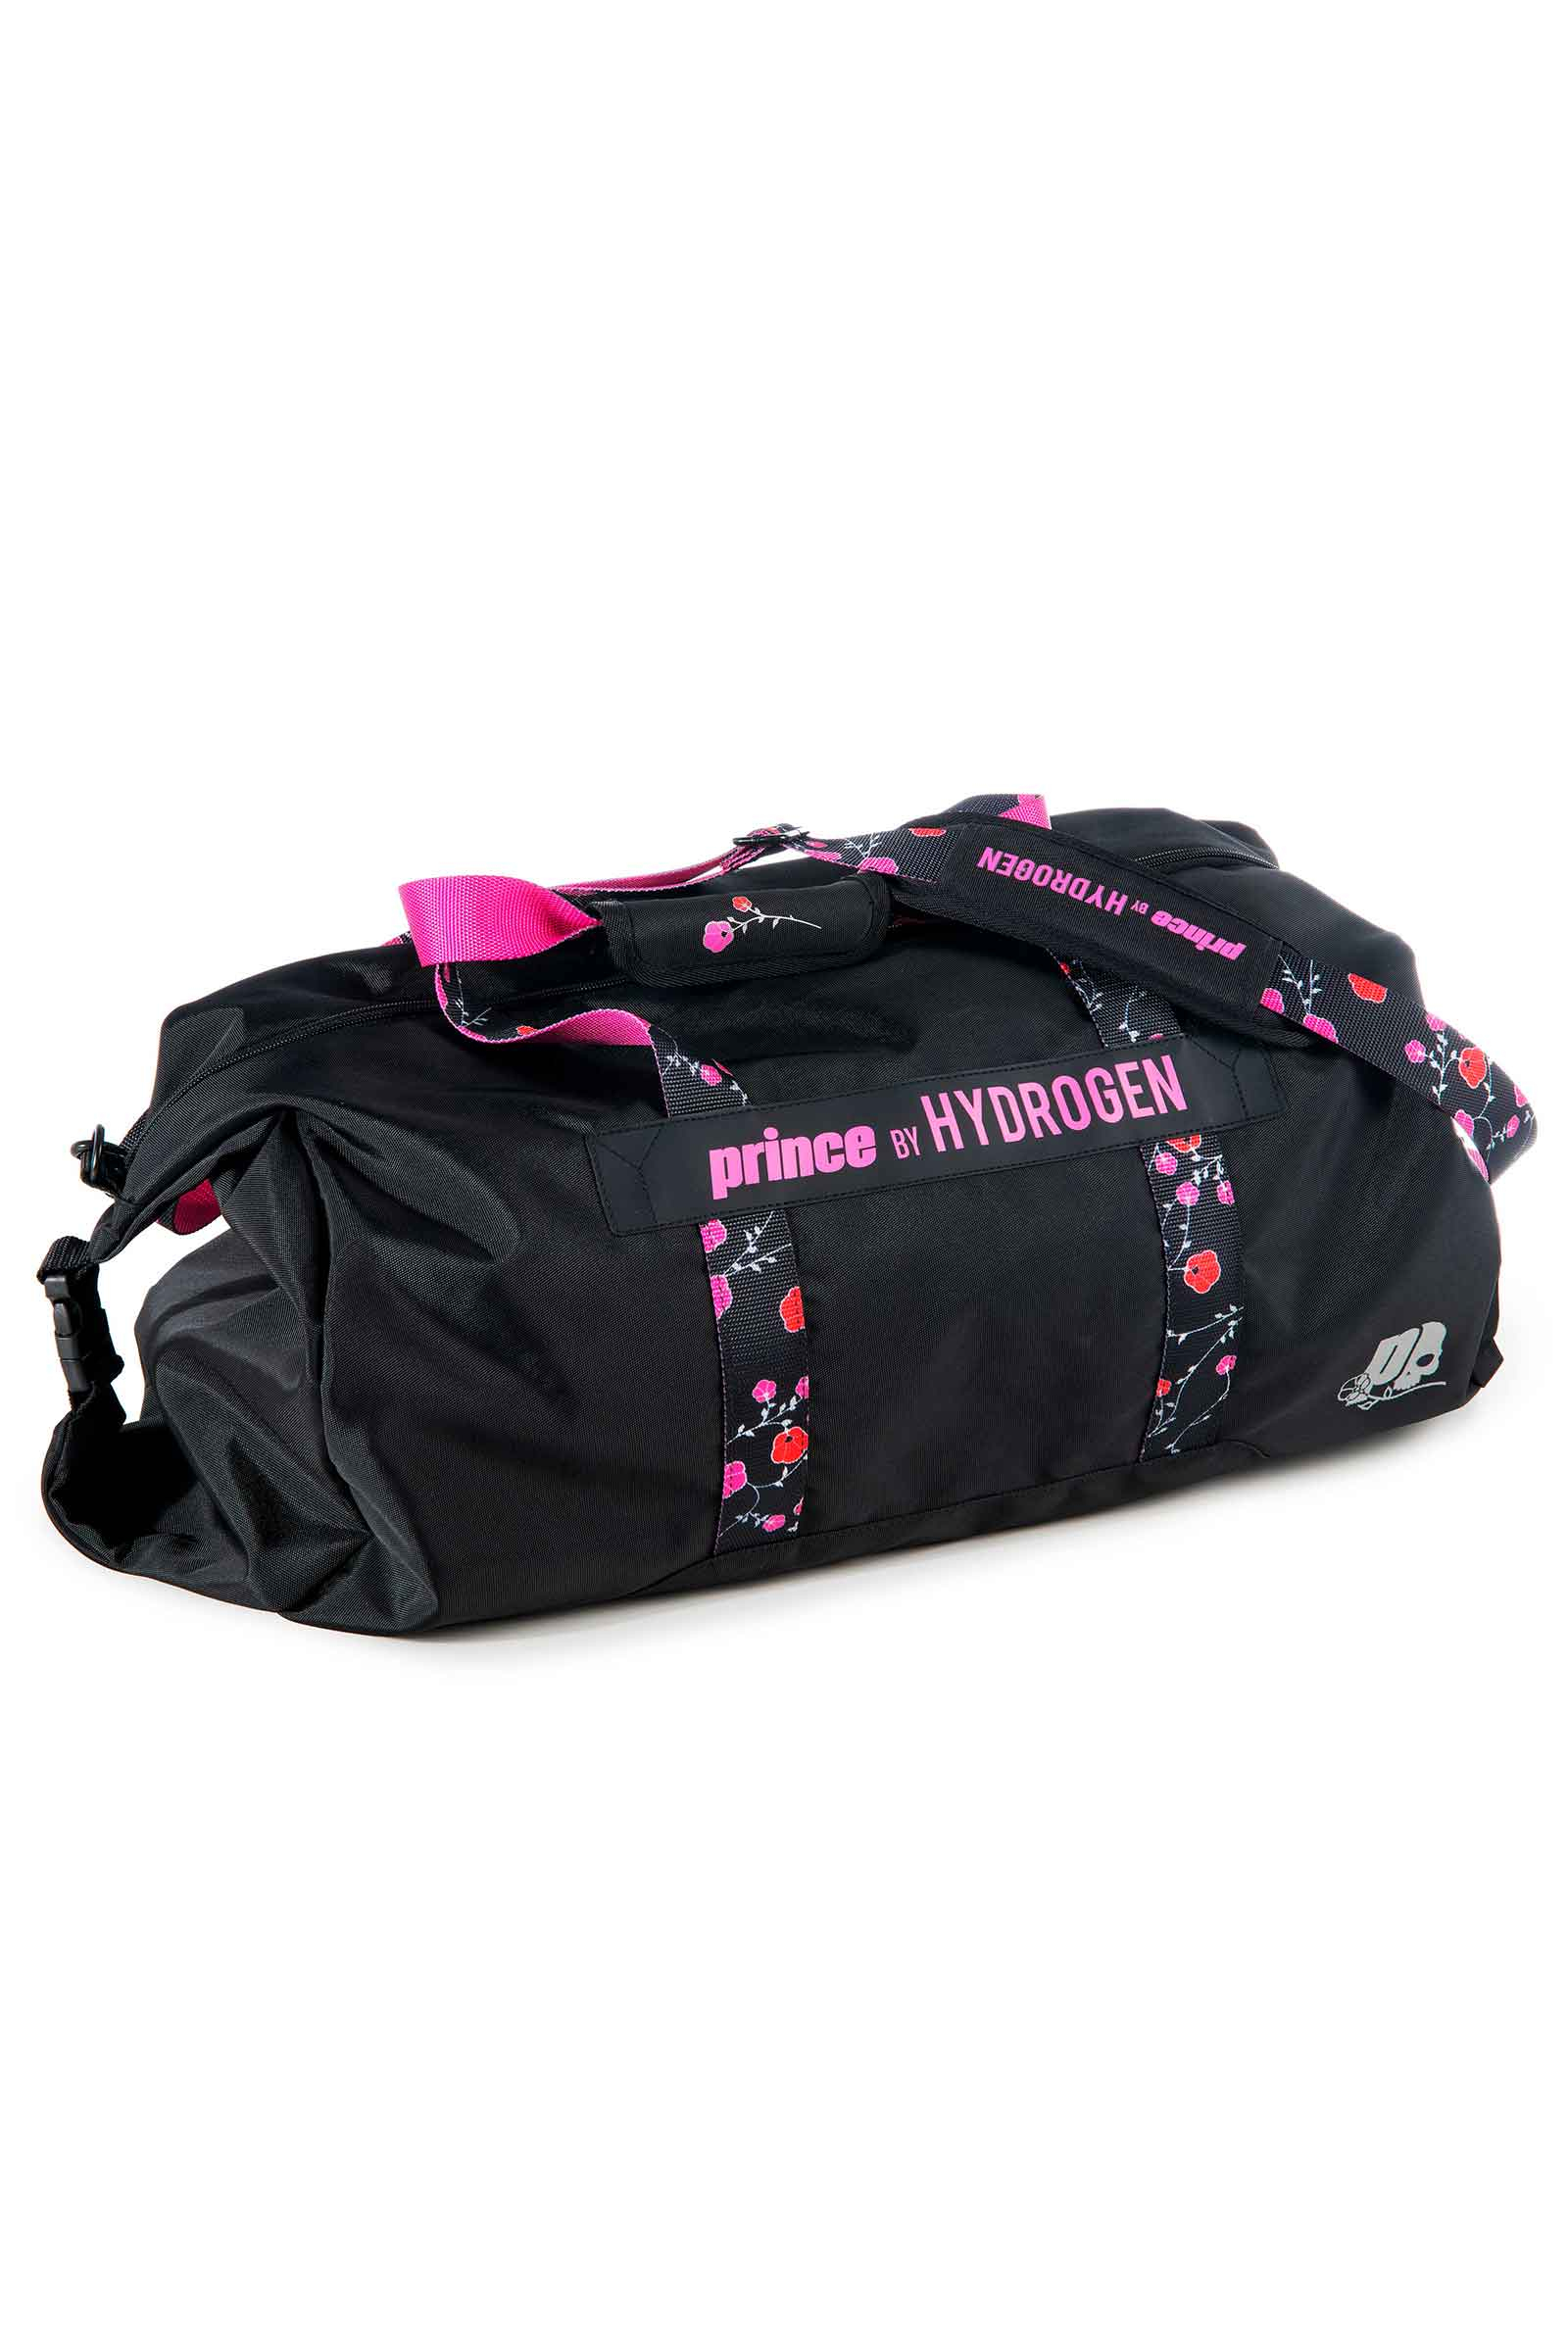 LADY MARY BAG PRINCE BY HYDROGEN - Accessories - Hydrogen - Luxury Sportwear